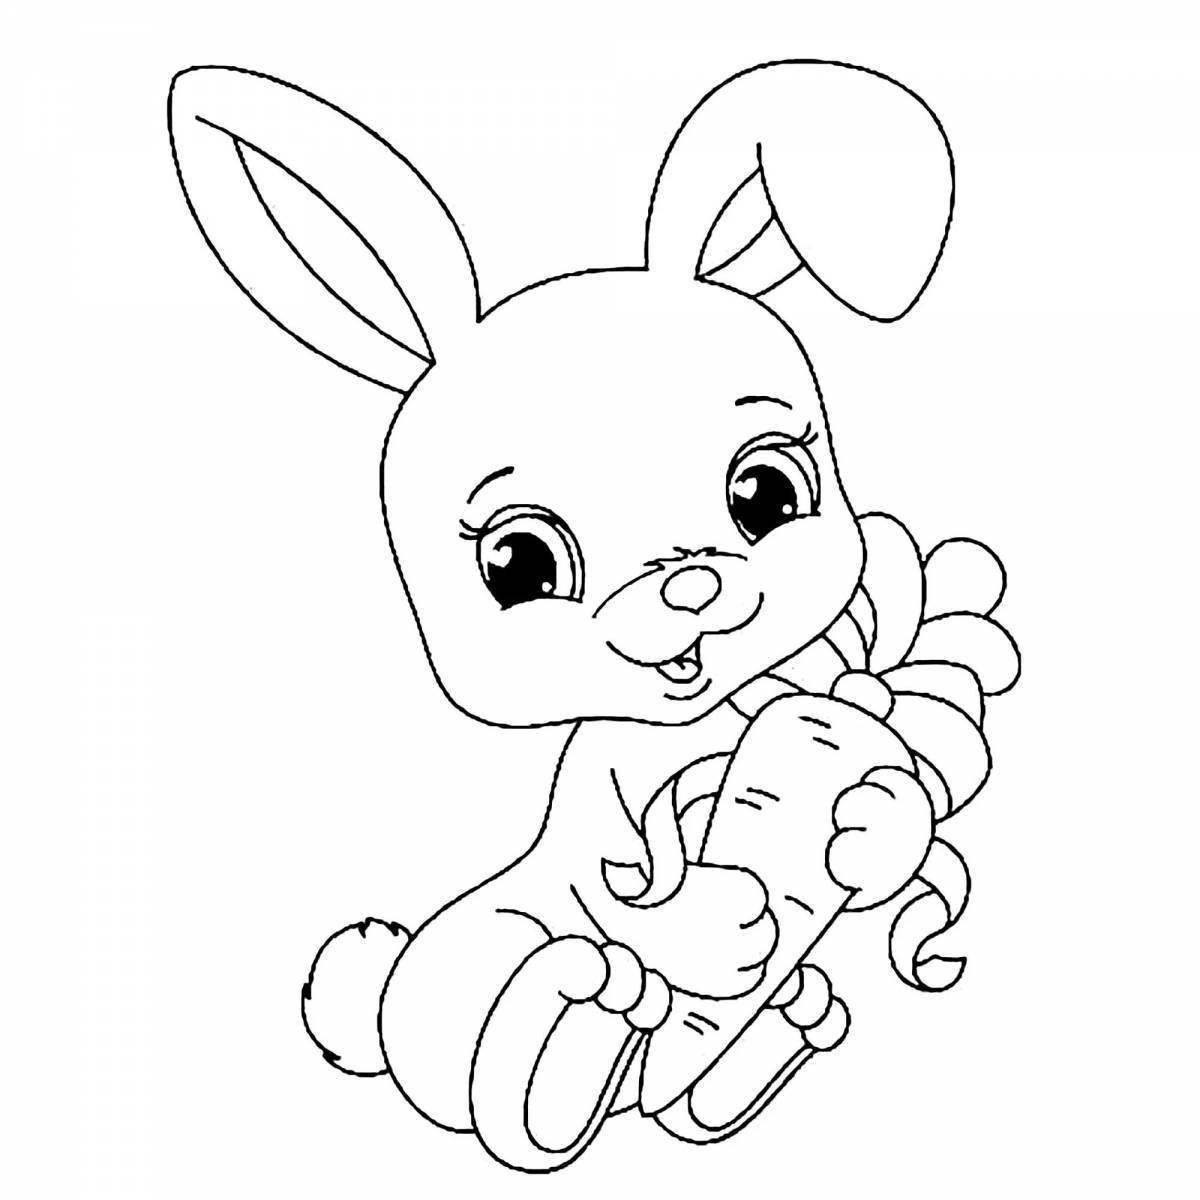 Magic cute rabbit coloring book